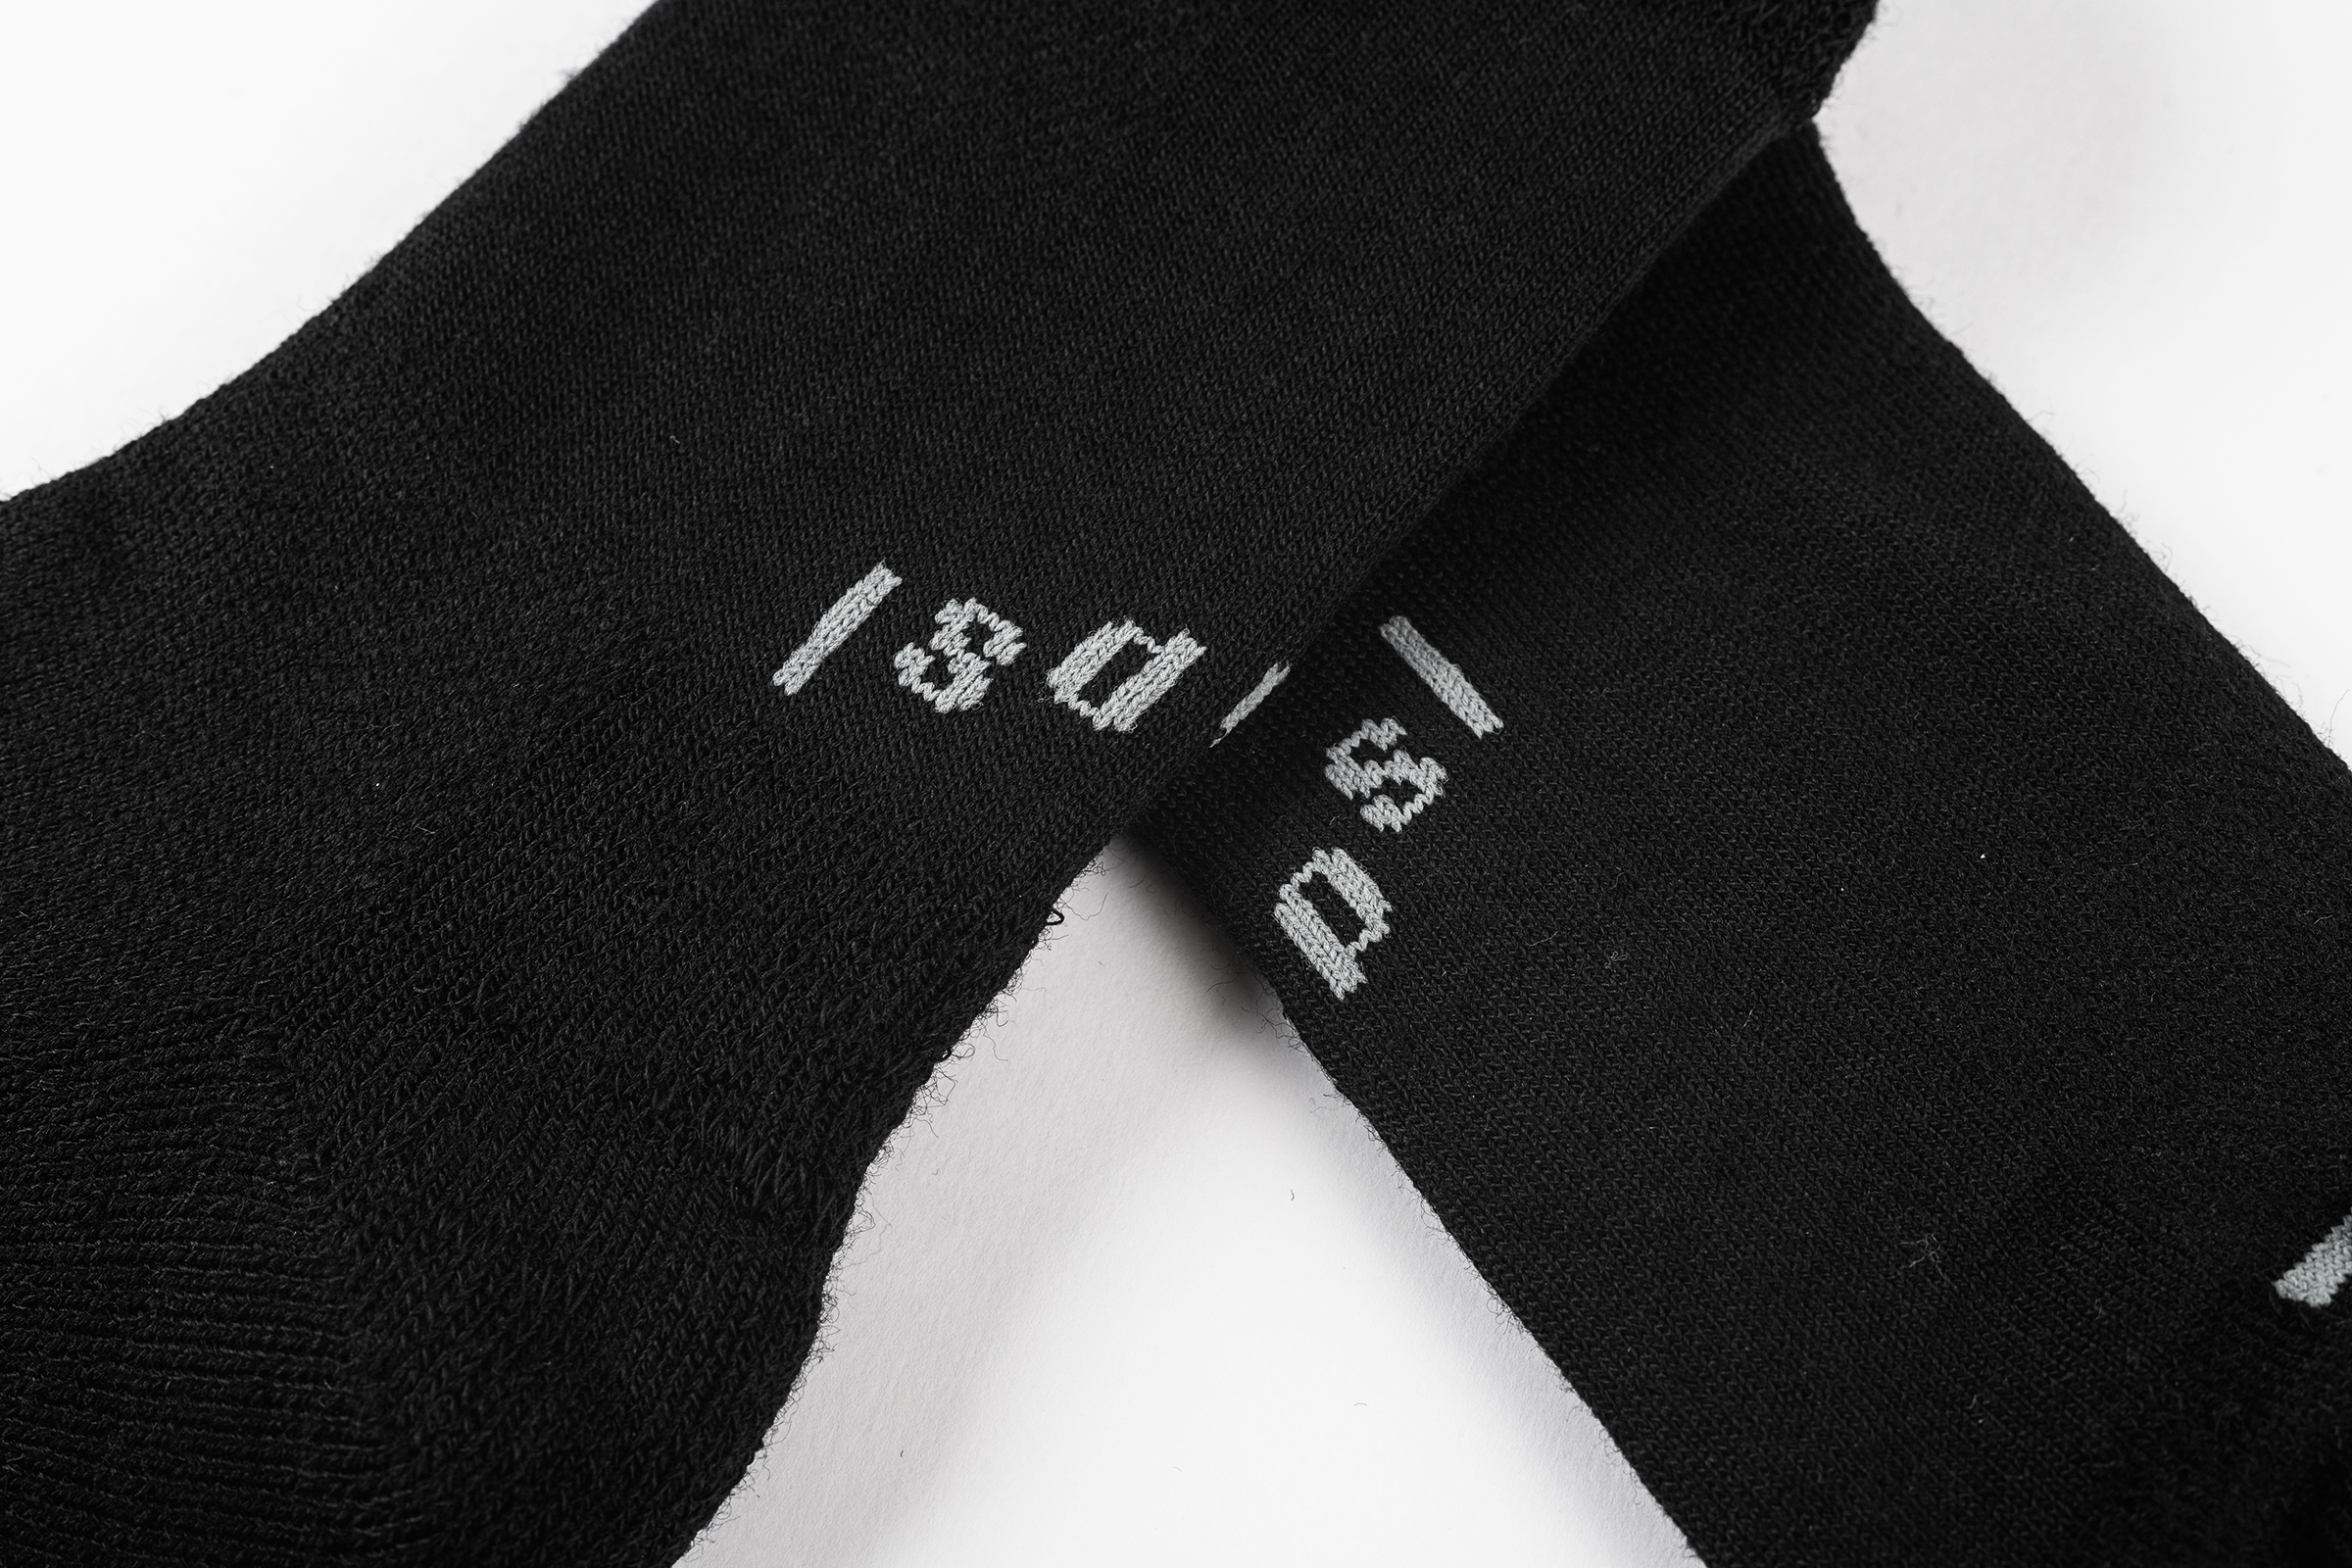 Merino Winter Socks Black